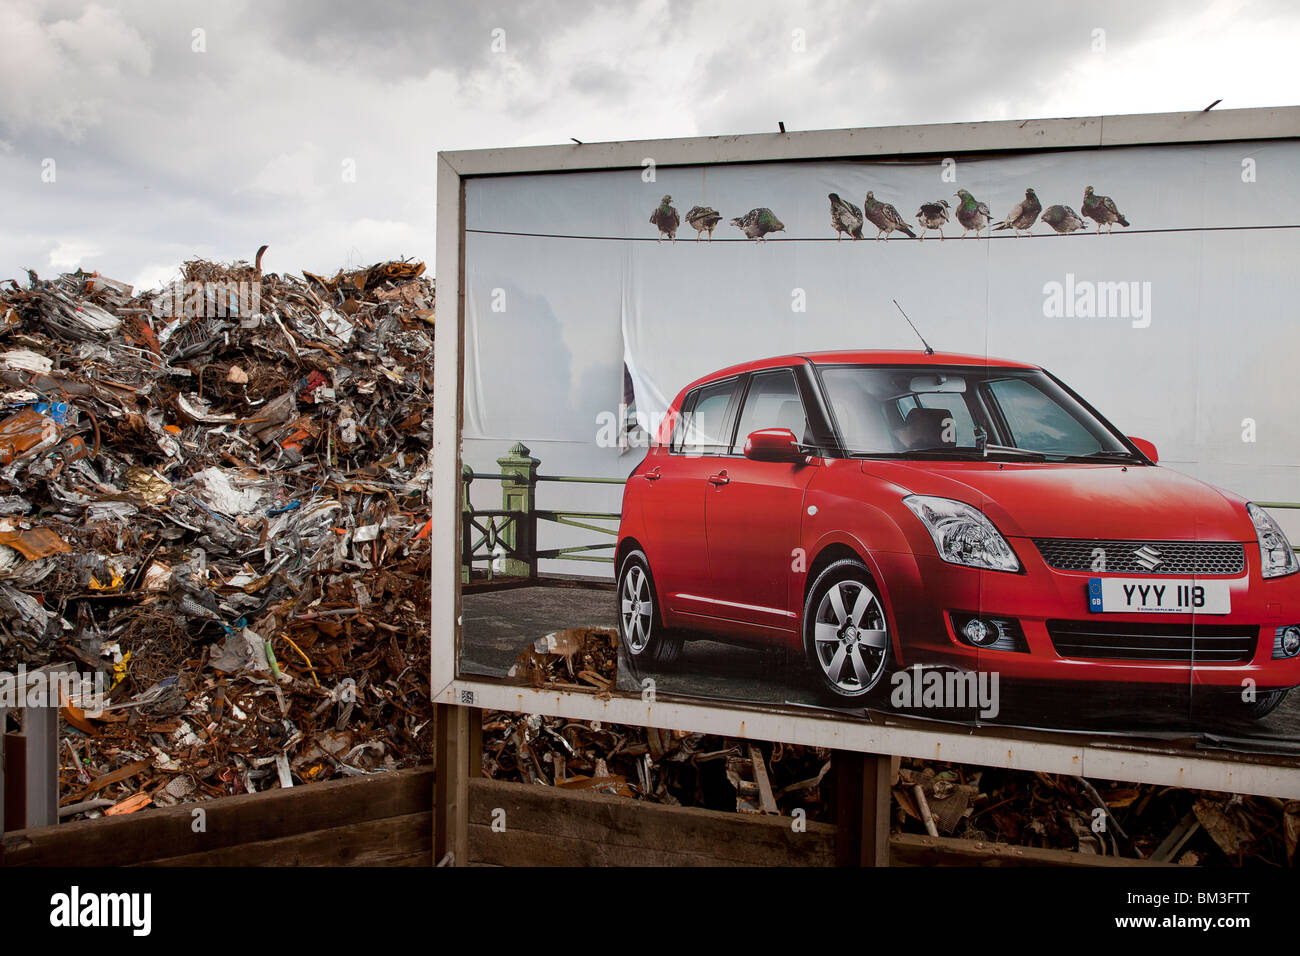 New car billboard in front of a scrap metal heap Stock Photo